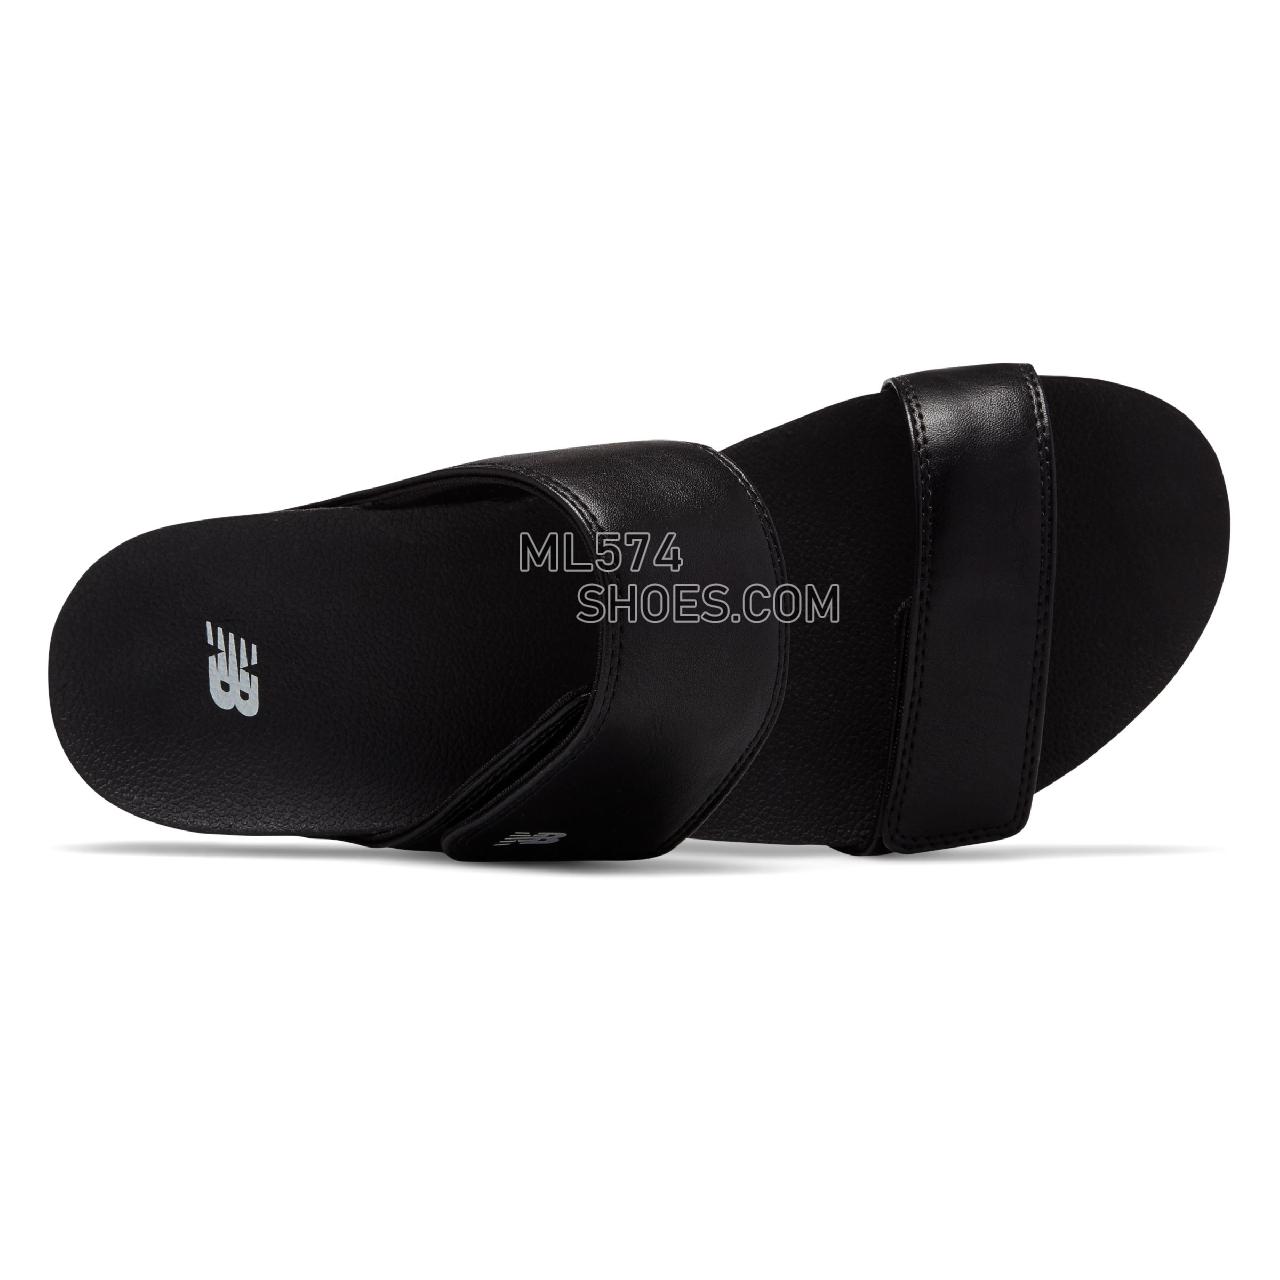 New Balance City Slide - Women's 3100 - Sandals Black - WR3100BK